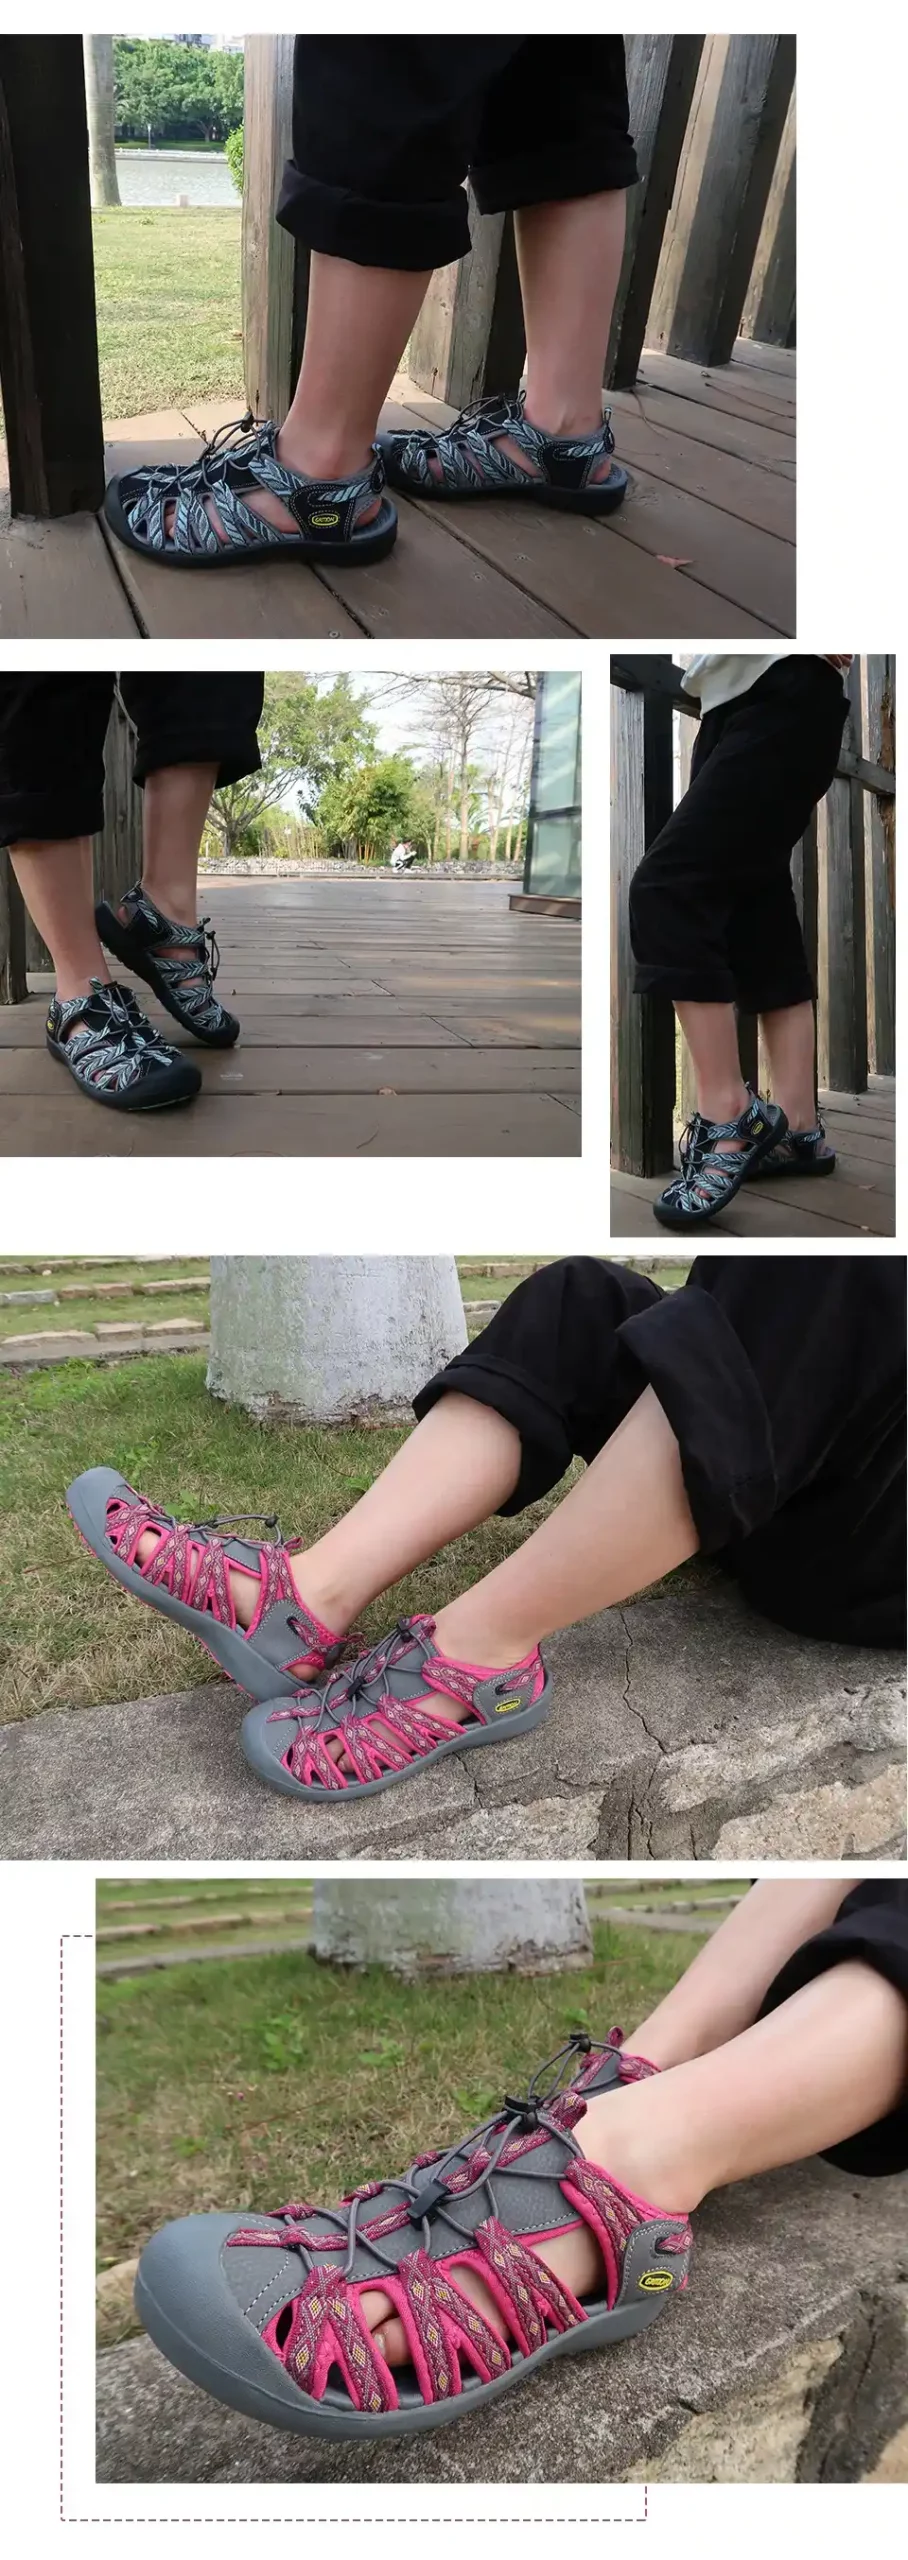 Grition Women Non-Slip Summer Sandals